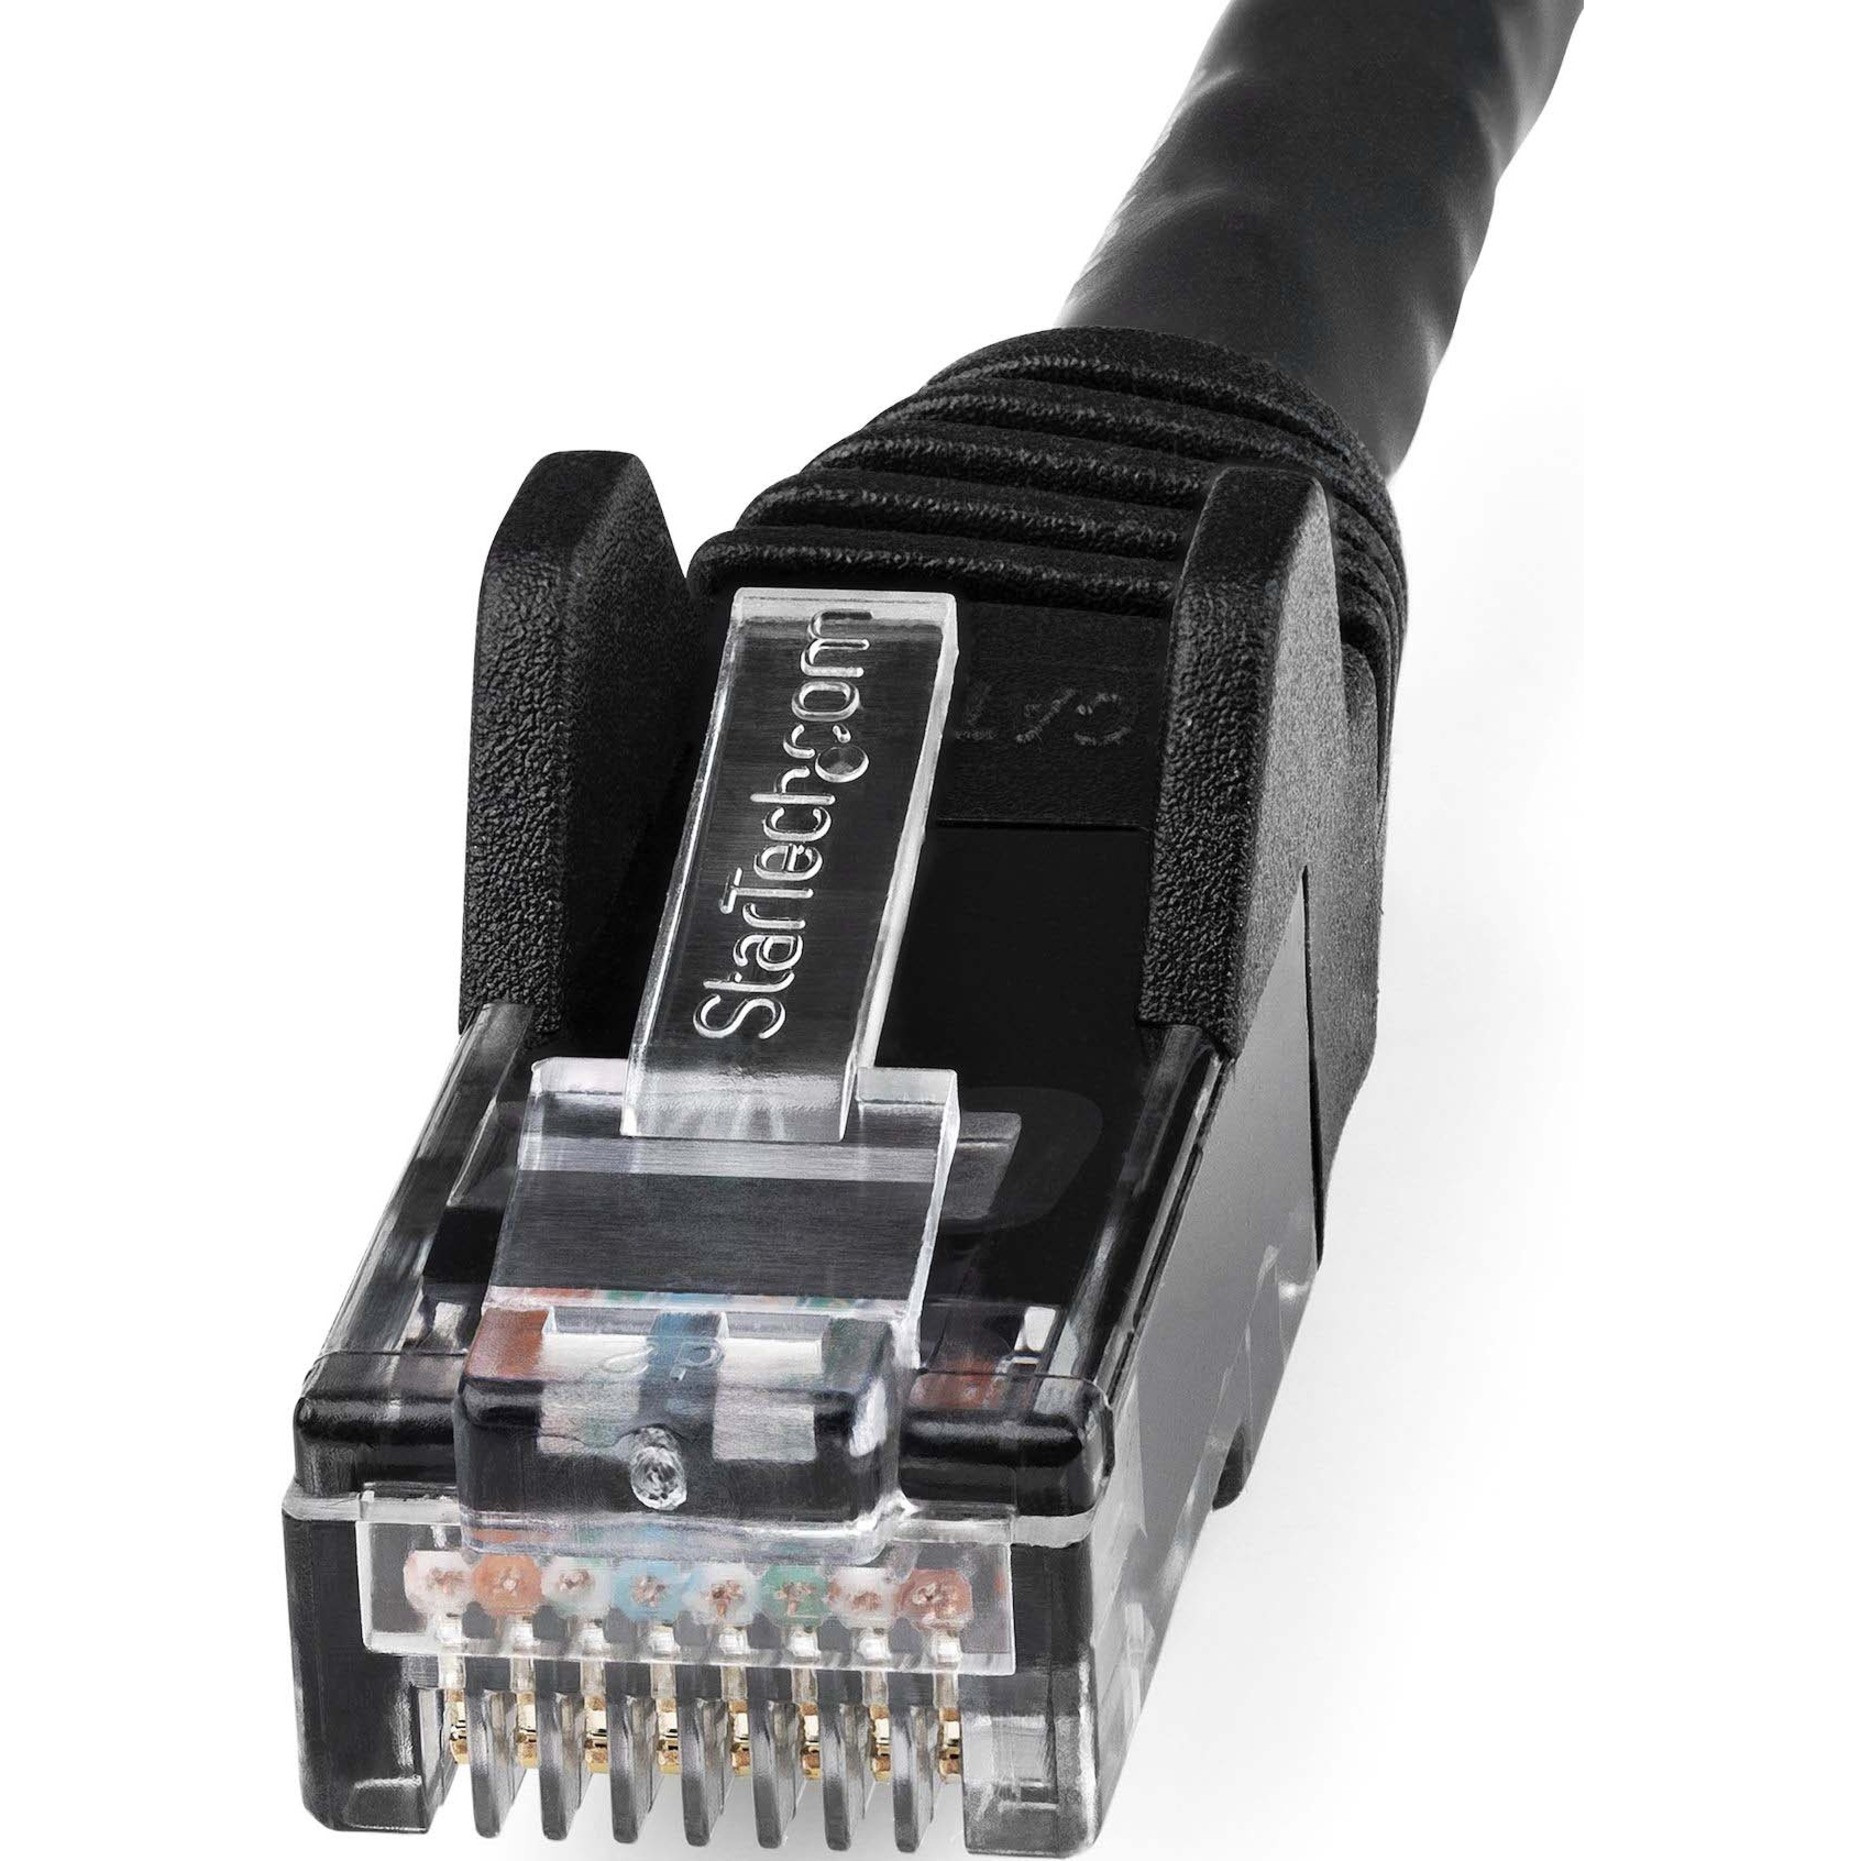 2m CAT6 RJ45 Ethernet Cable (White)